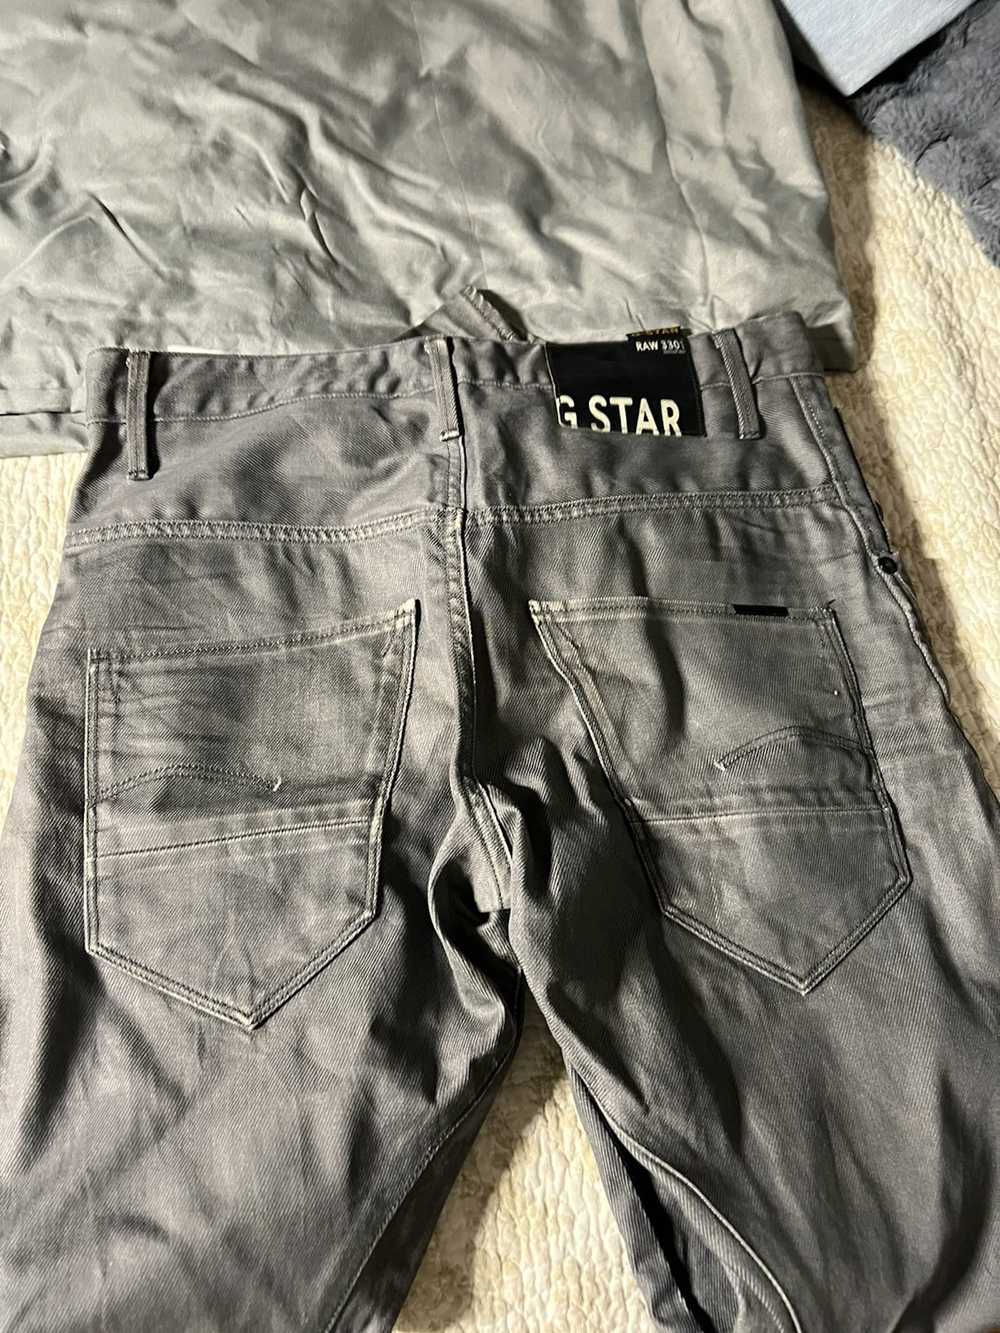 G Star Raw gstar jeans - image 4